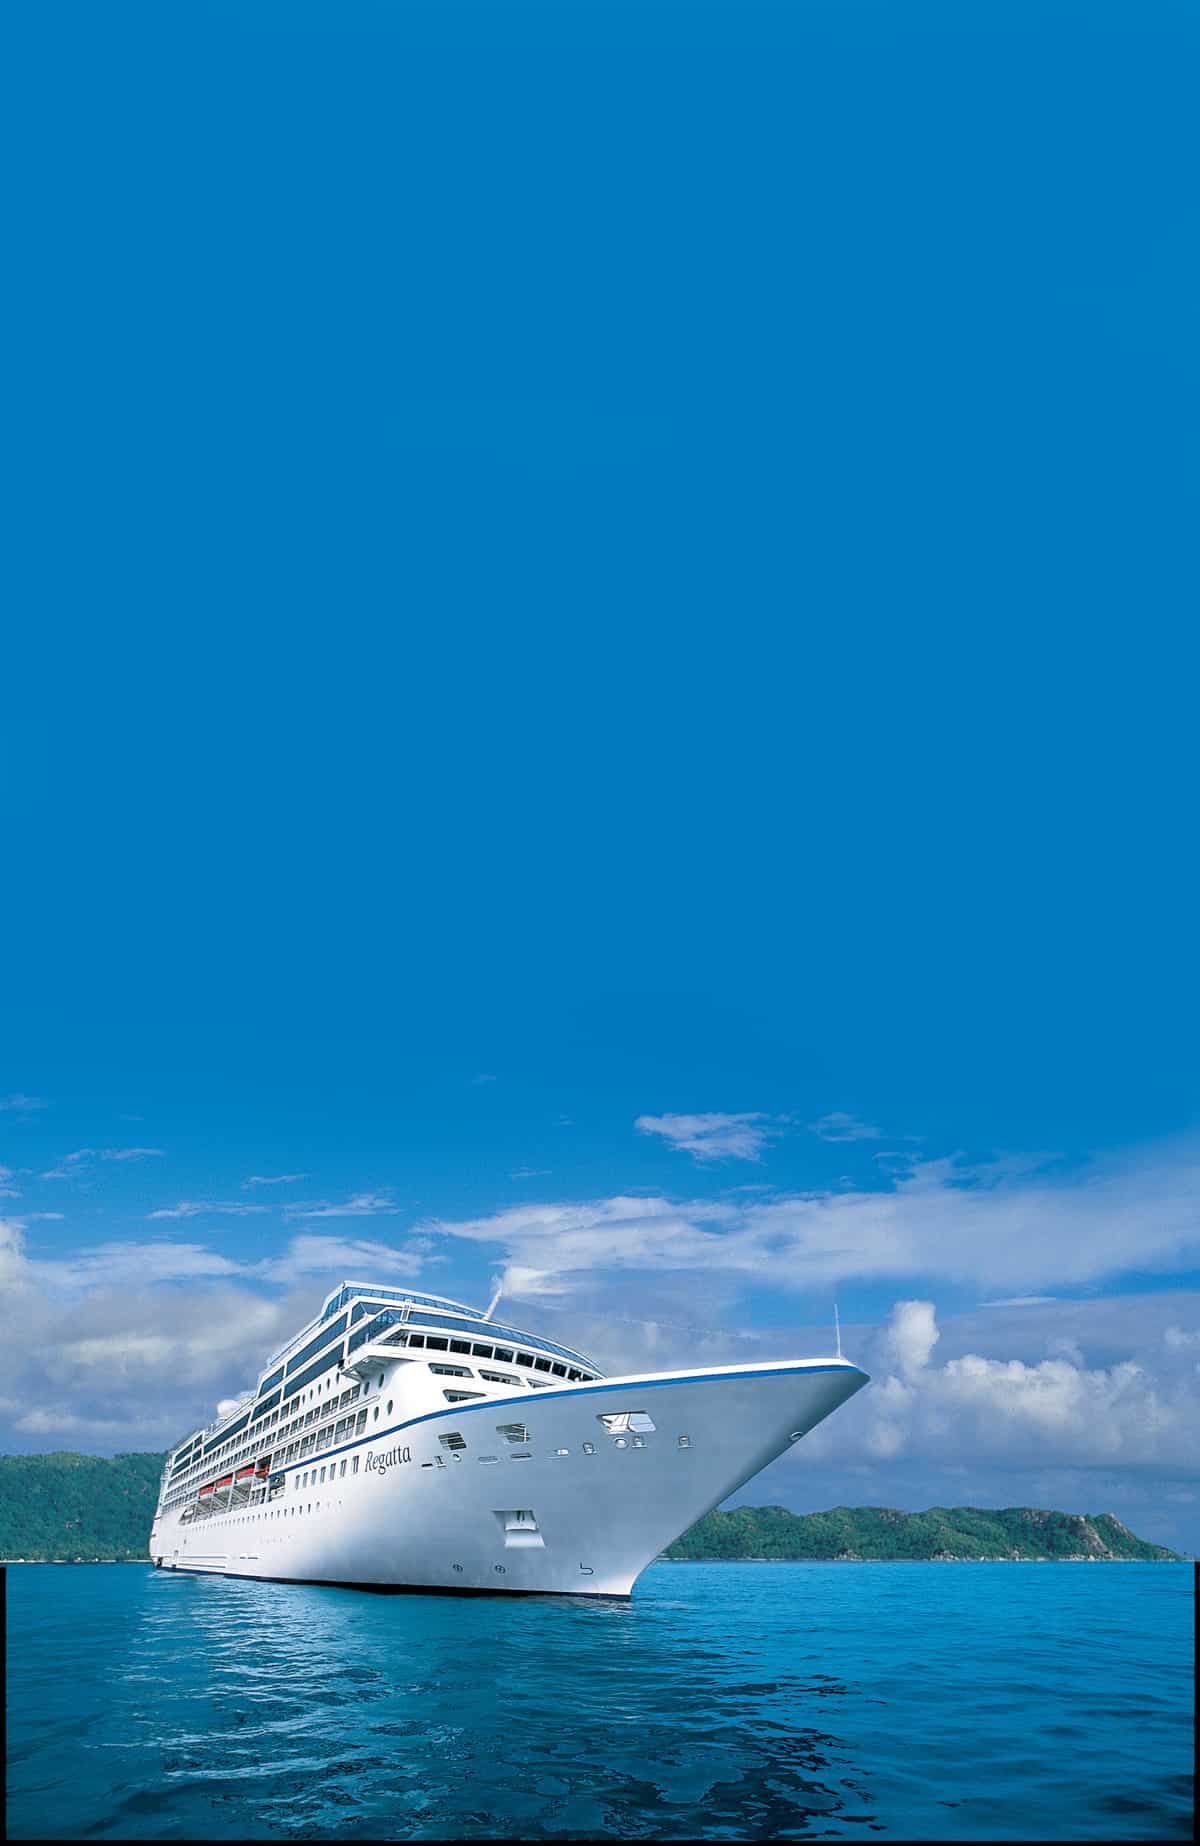 oceania cruise australia and new zealand